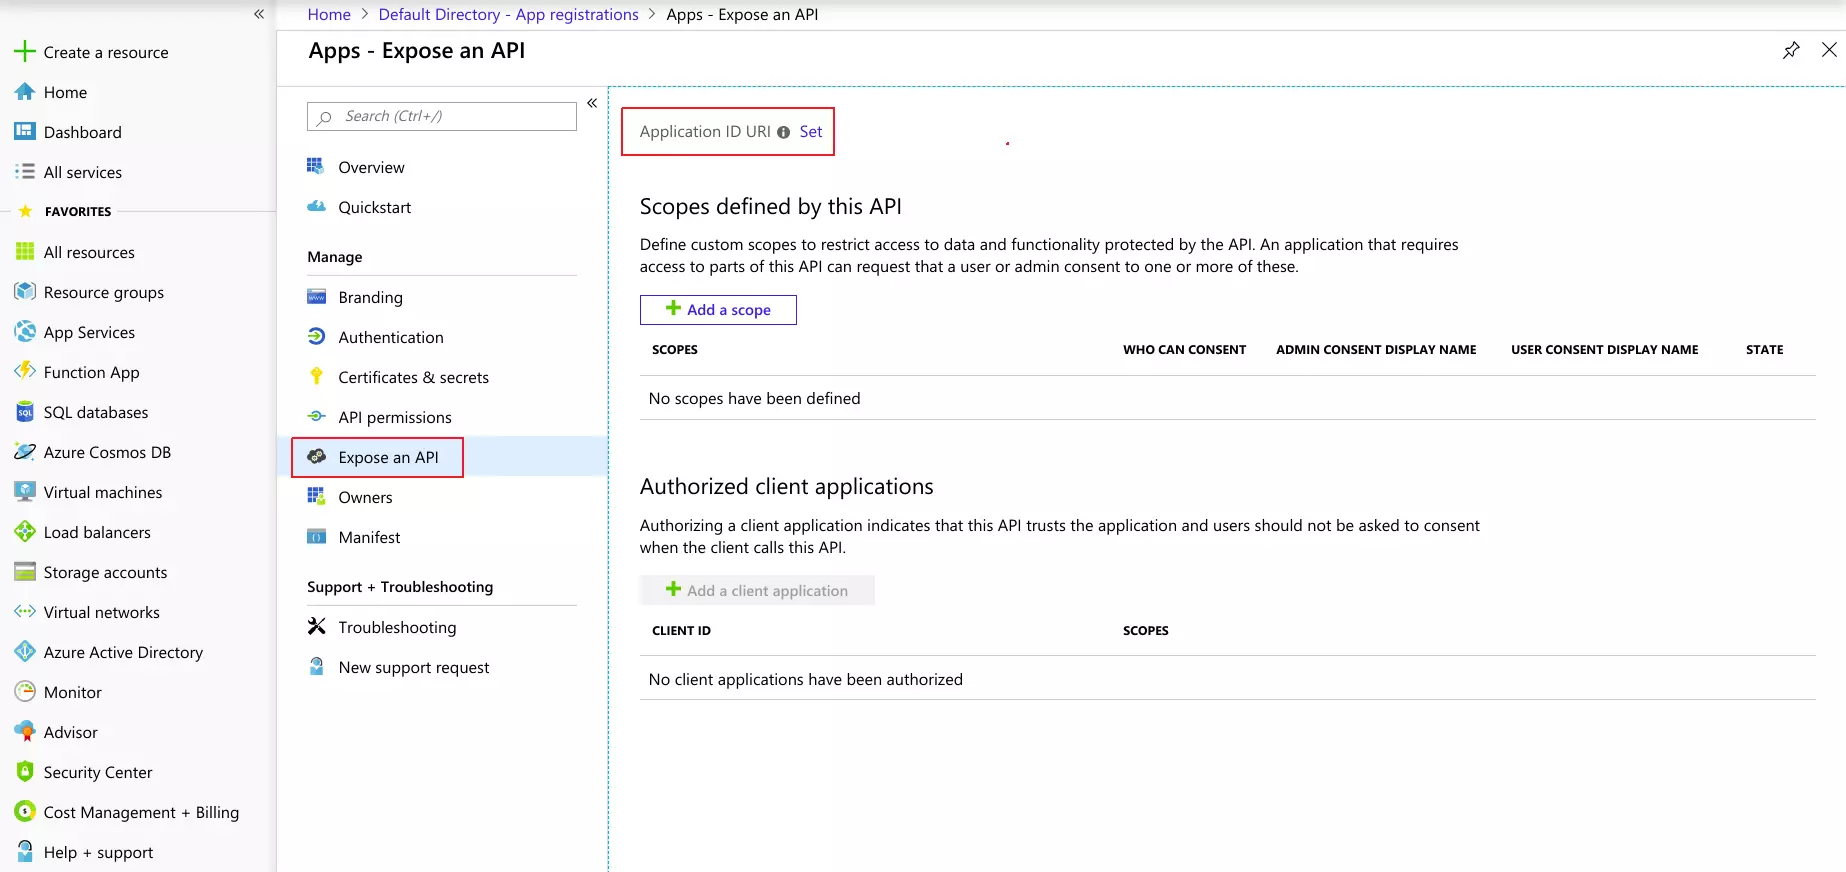 Configure Azure AD as IDP -SAML Single Sign-On(SSO) for Joomla - Azure AD SSO Login -  Expose an API)